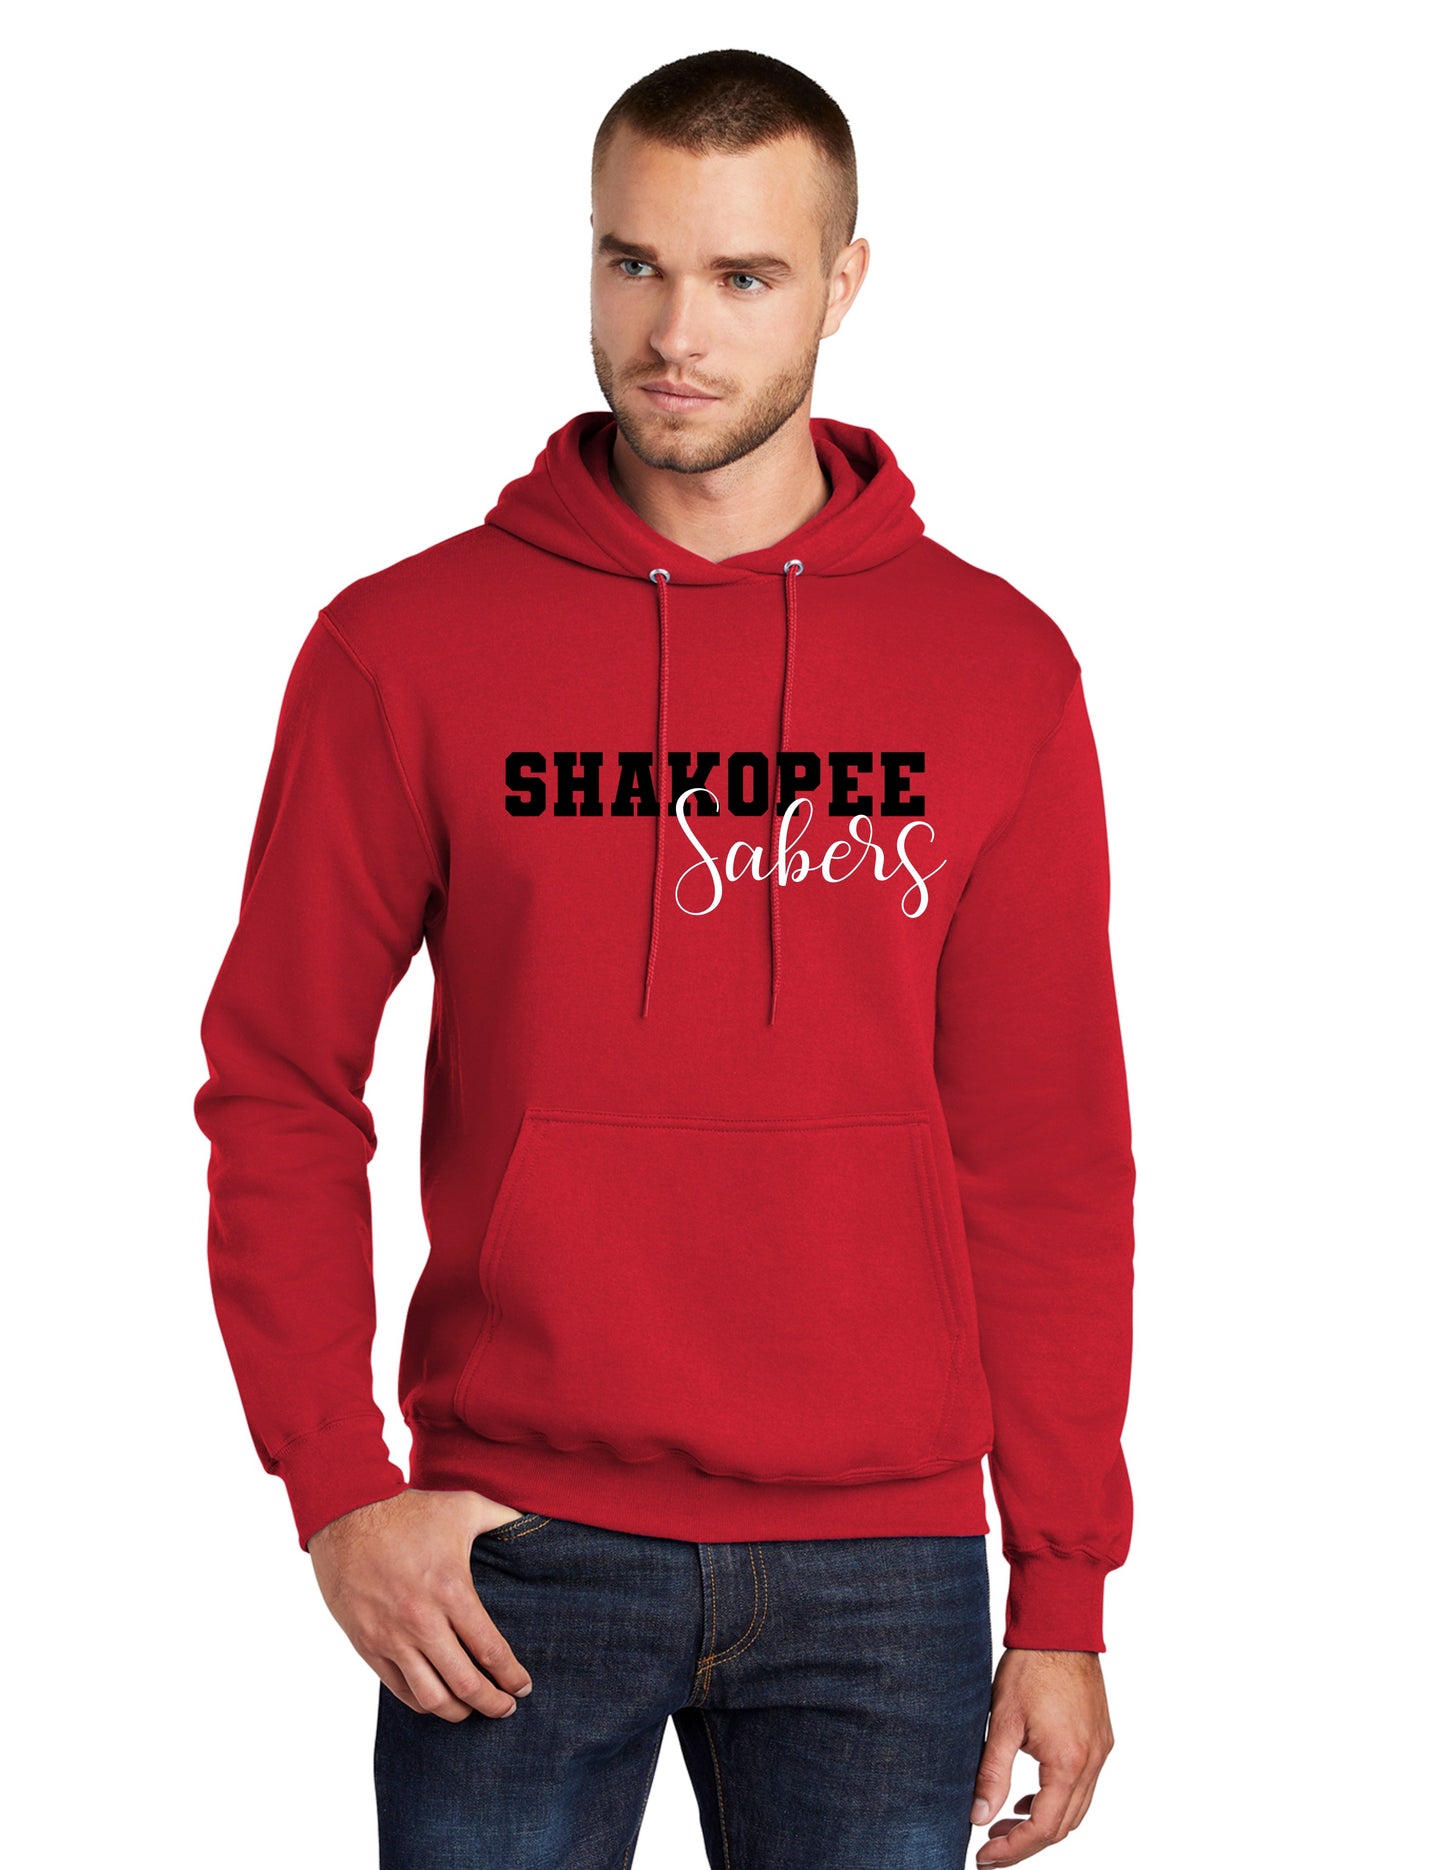 Shakopee Sabers Sweatshirt